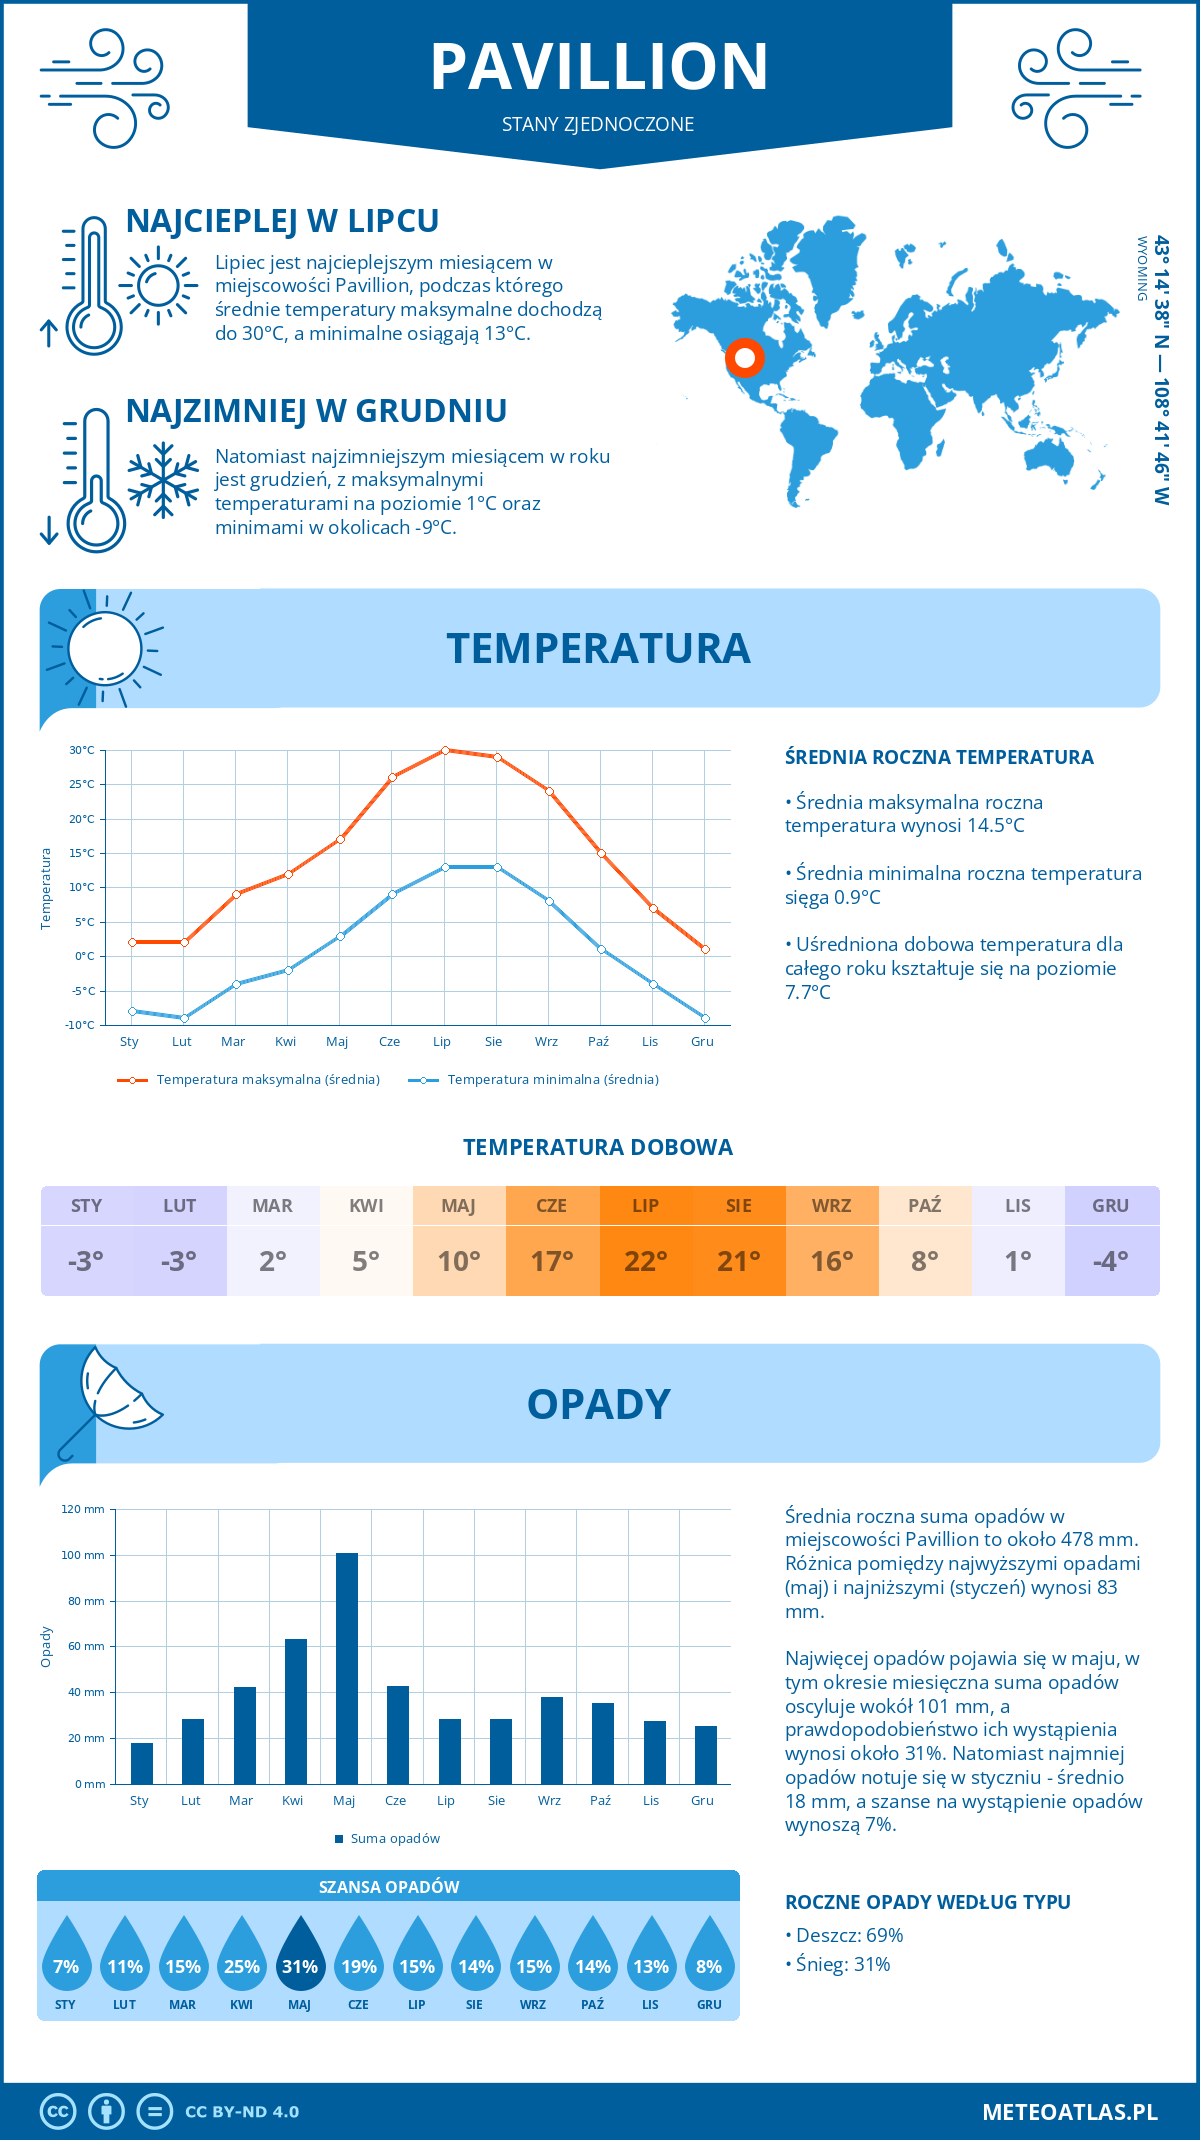 Pogoda Pavillion (Stany Zjednoczone). Temperatura oraz opady.